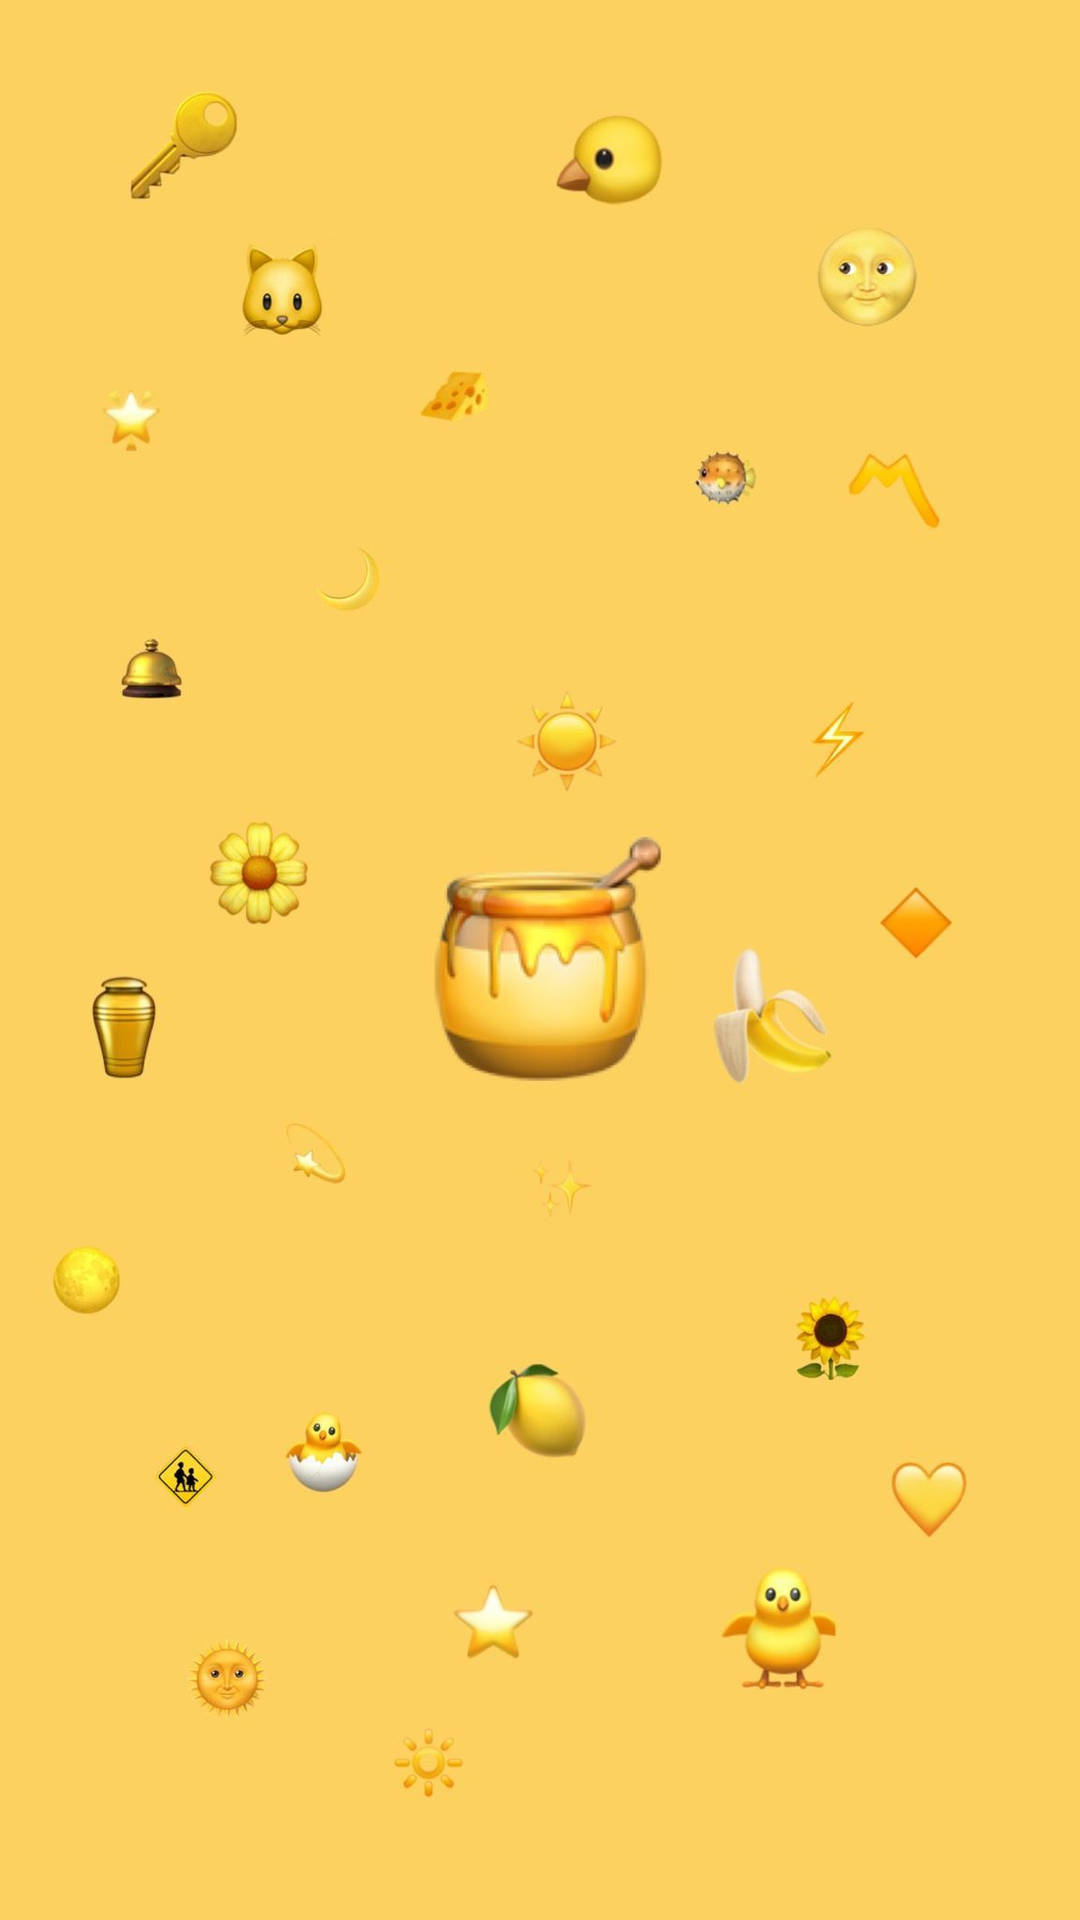 Honeybee Pot With Cute Yellow Emojis Background